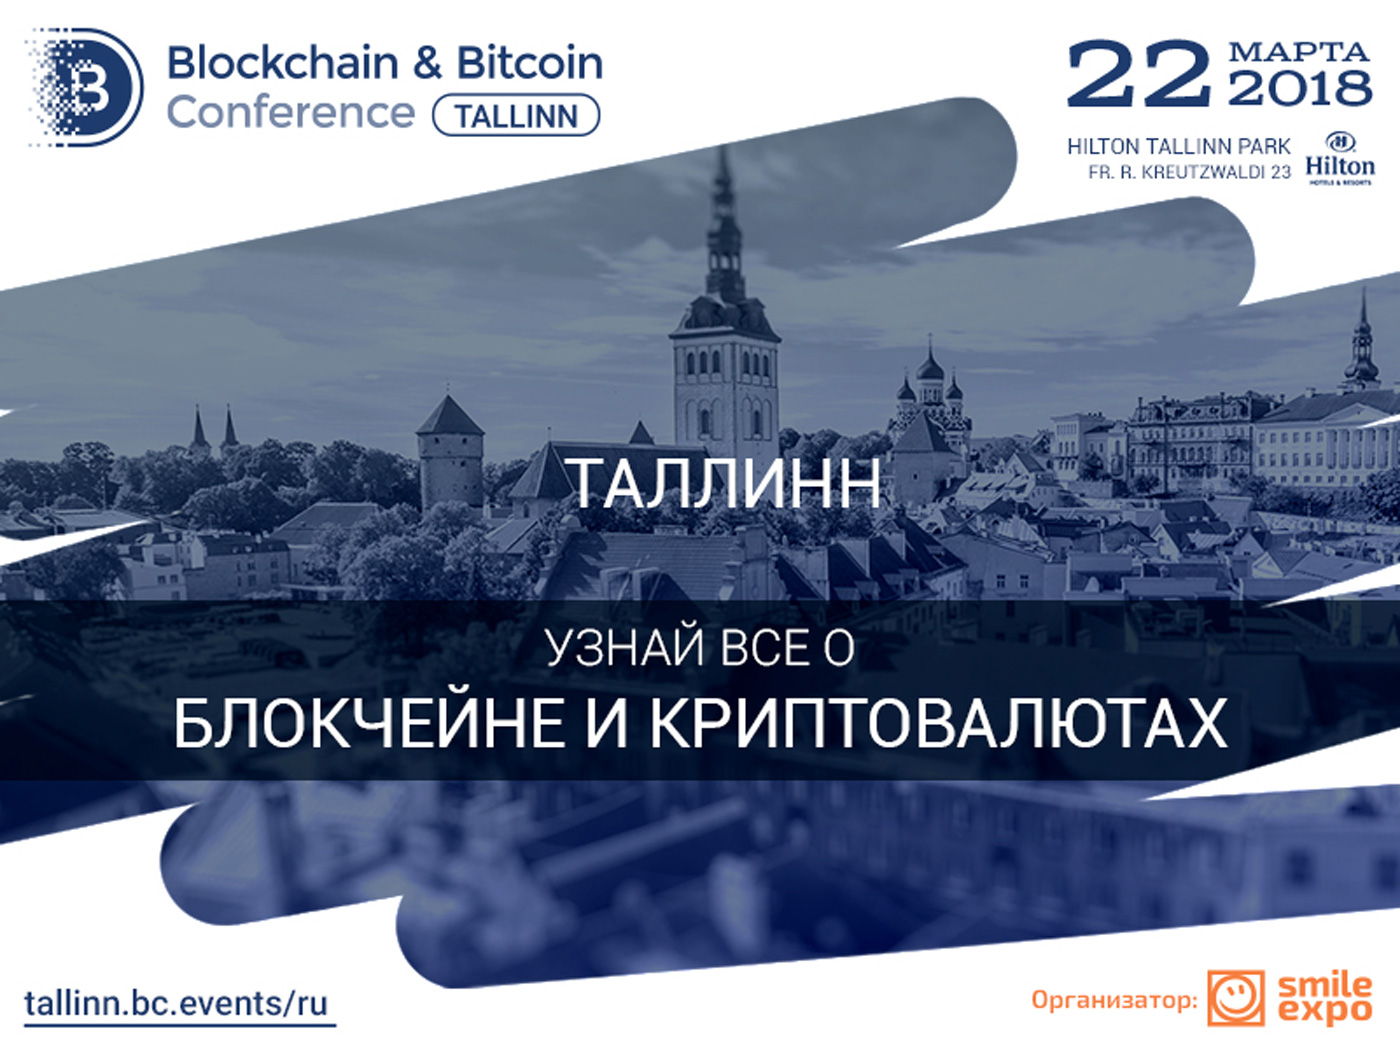 Blockchain & Bitcoin Conference Tallinn — запуск ICO и юридические аспекты блокчейна в бизнесе